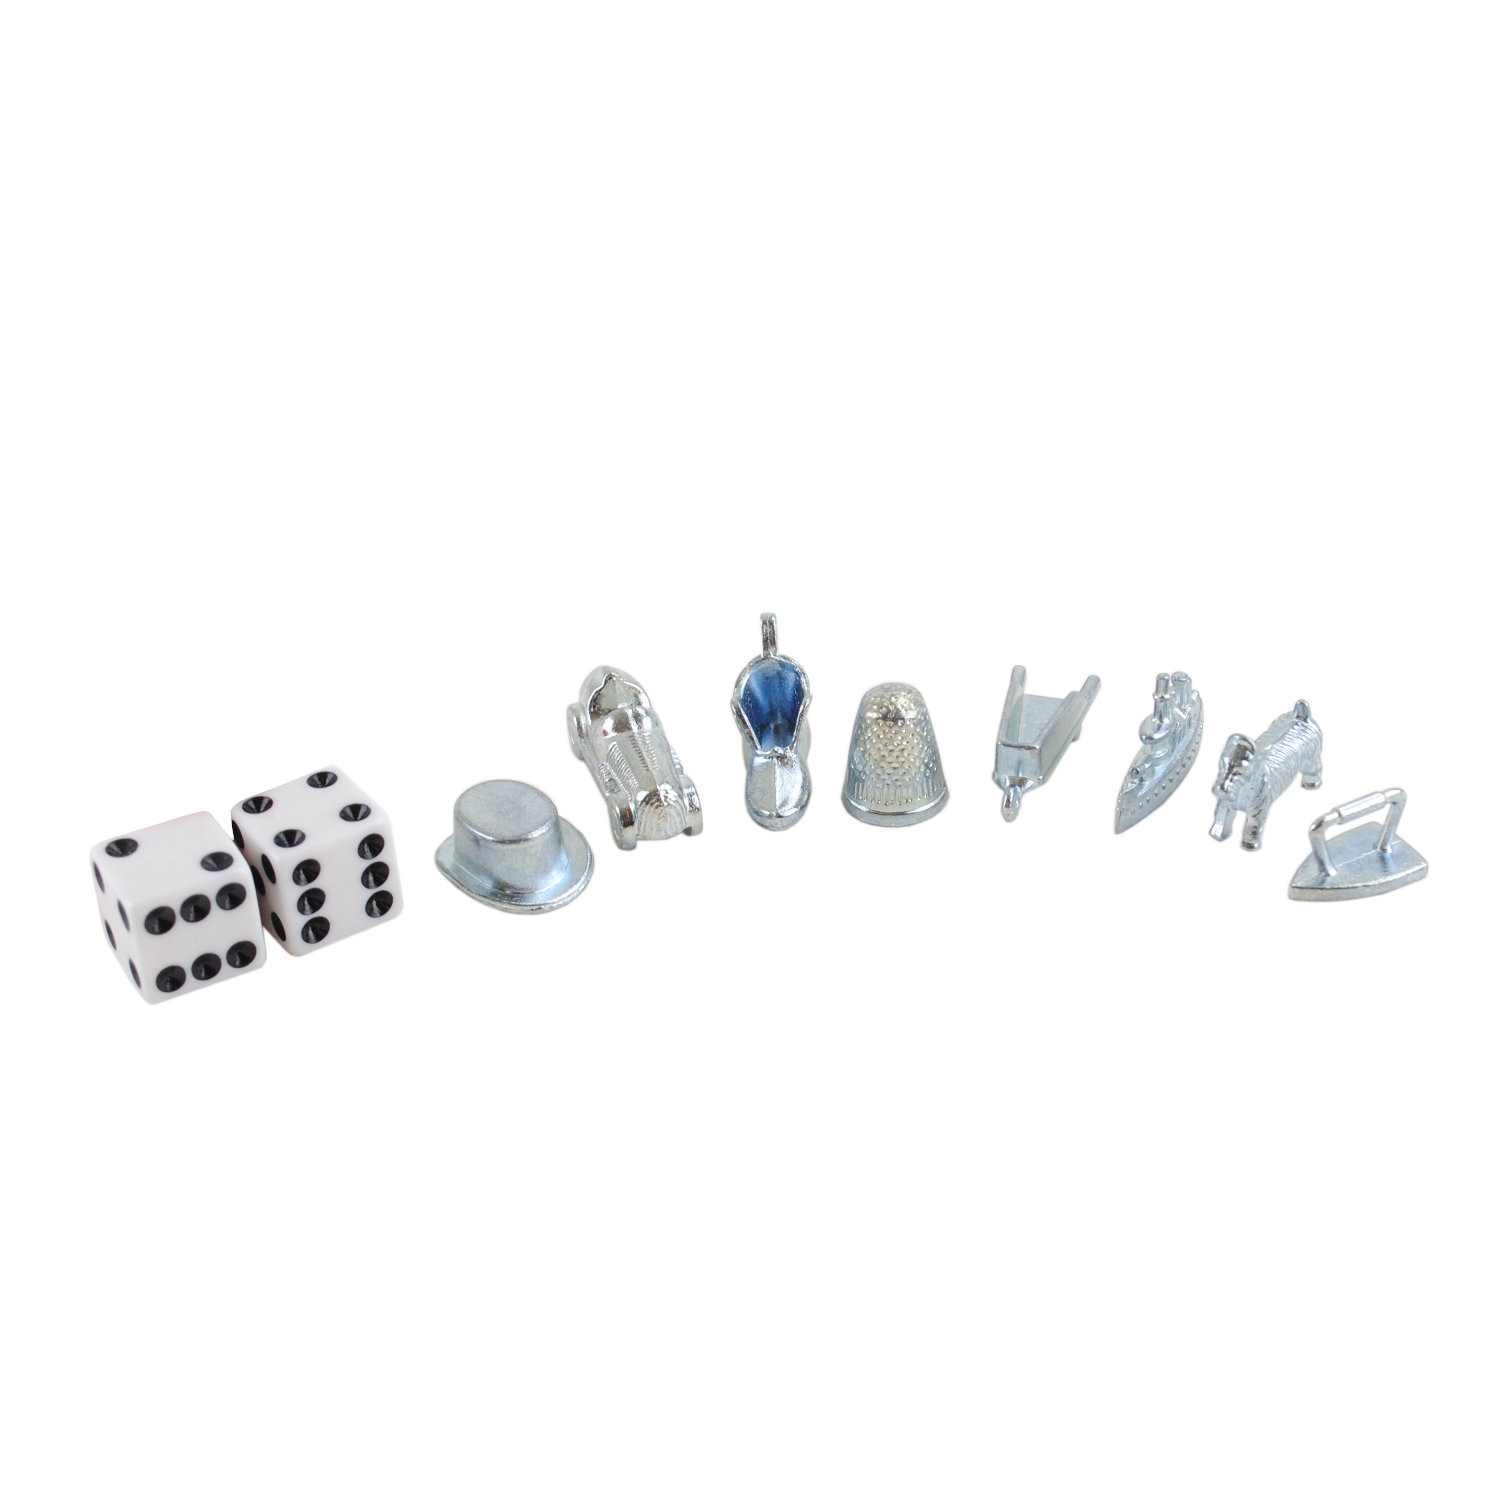 Monopoly Figuren und Würfel (silber, 2 weiße Würfel) 